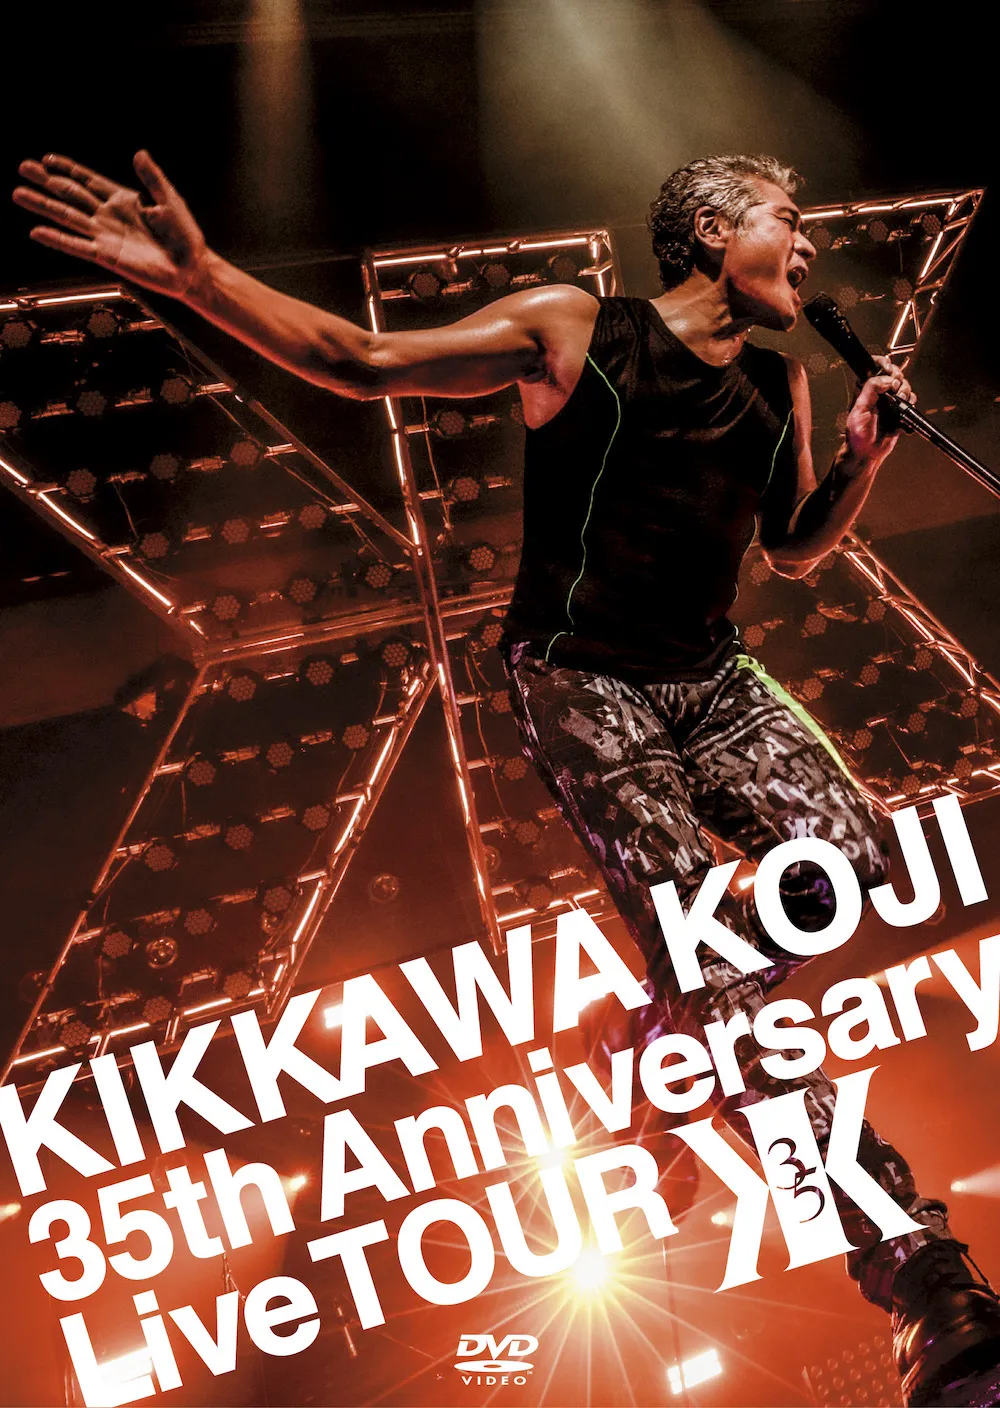 「KIKKAWA KOJI 35th Anniversary Live TOUR」のジャケット